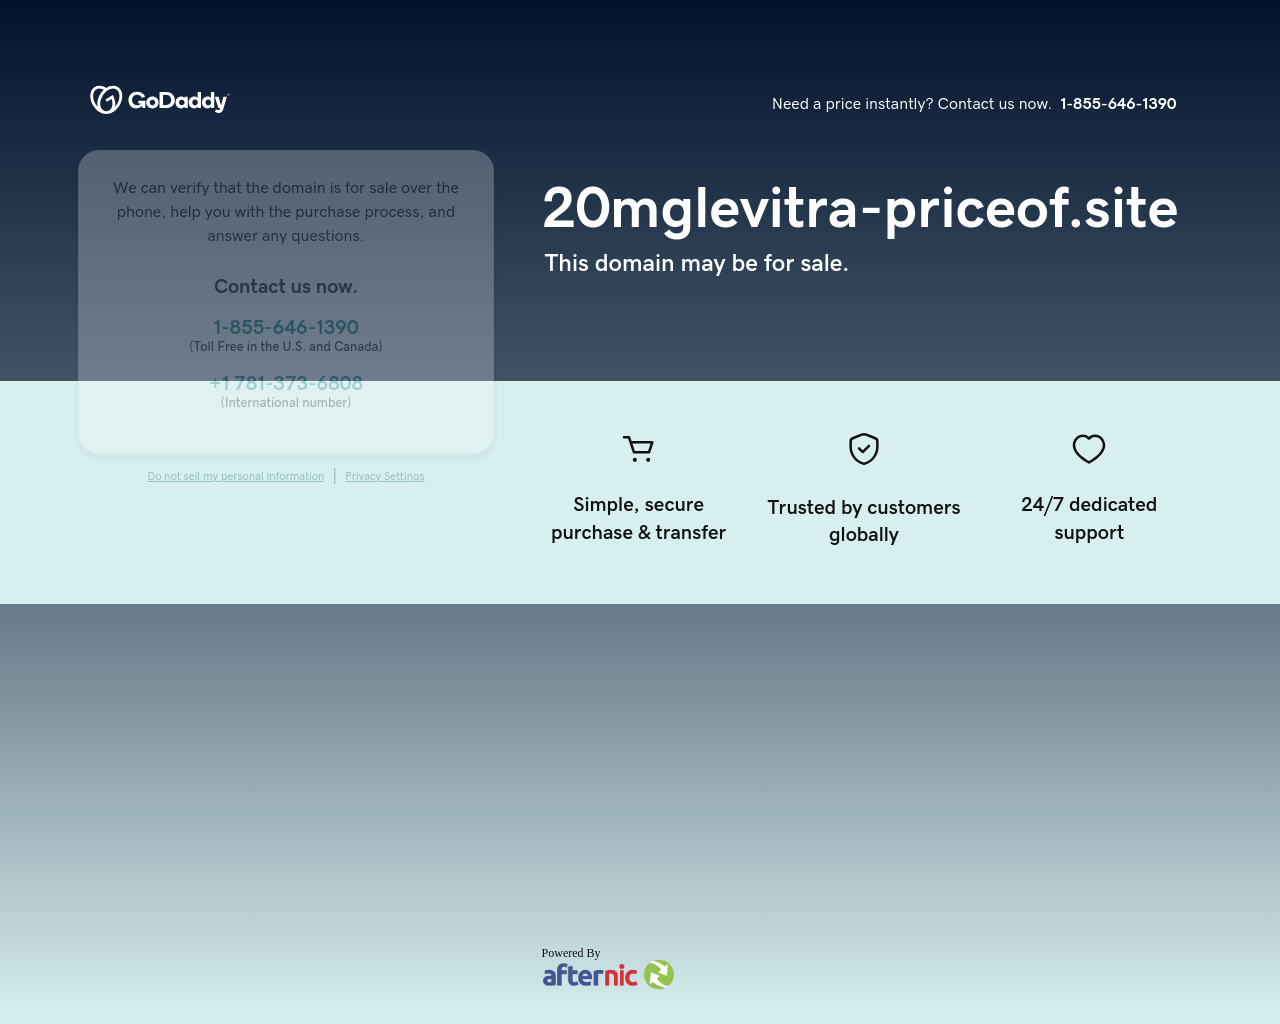 20mglevitra-priceof.site